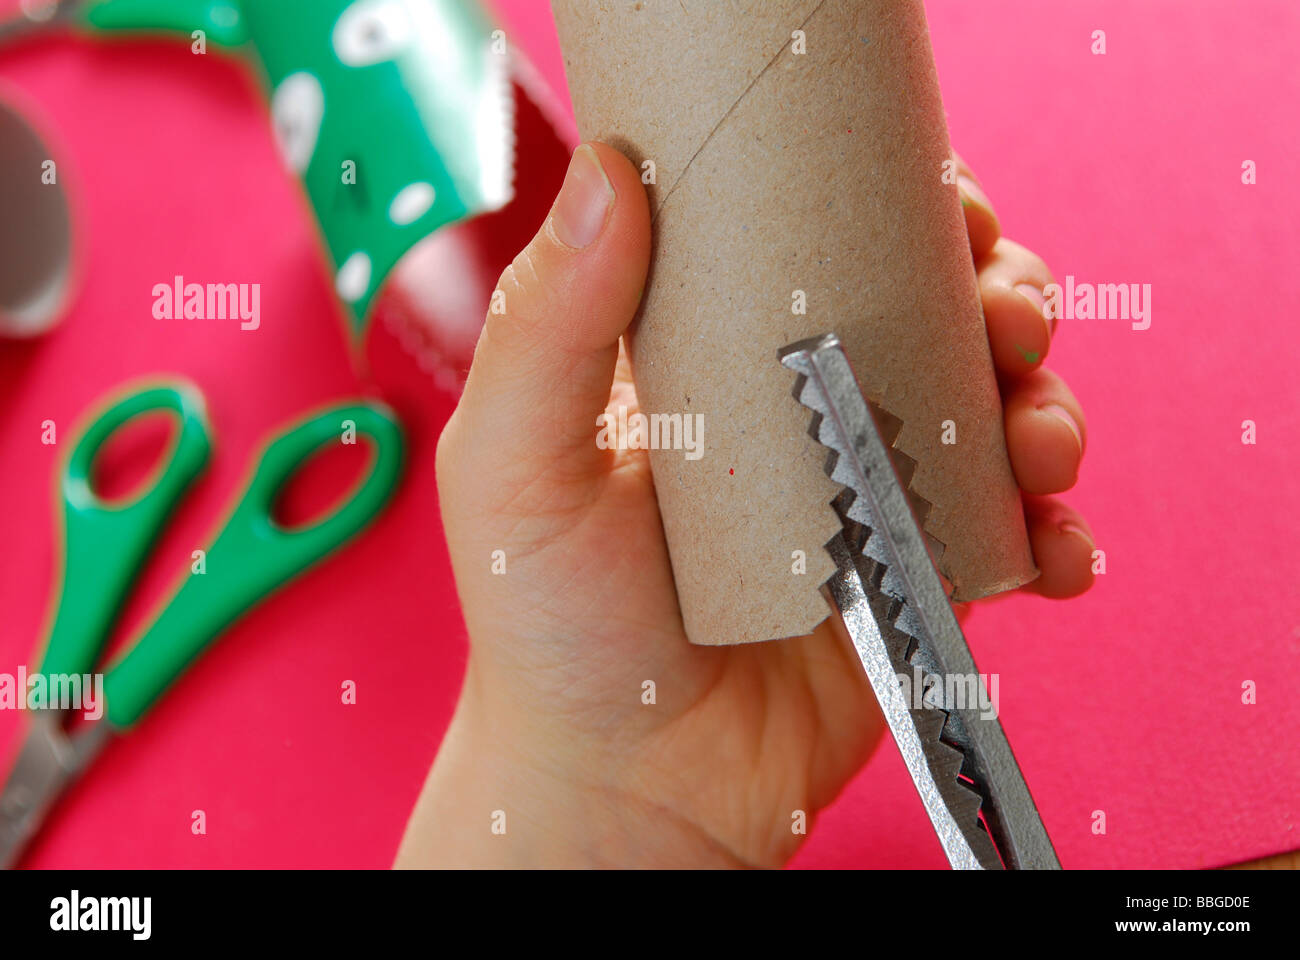 Children's hands cutting with zigzag scissors Stock Photo